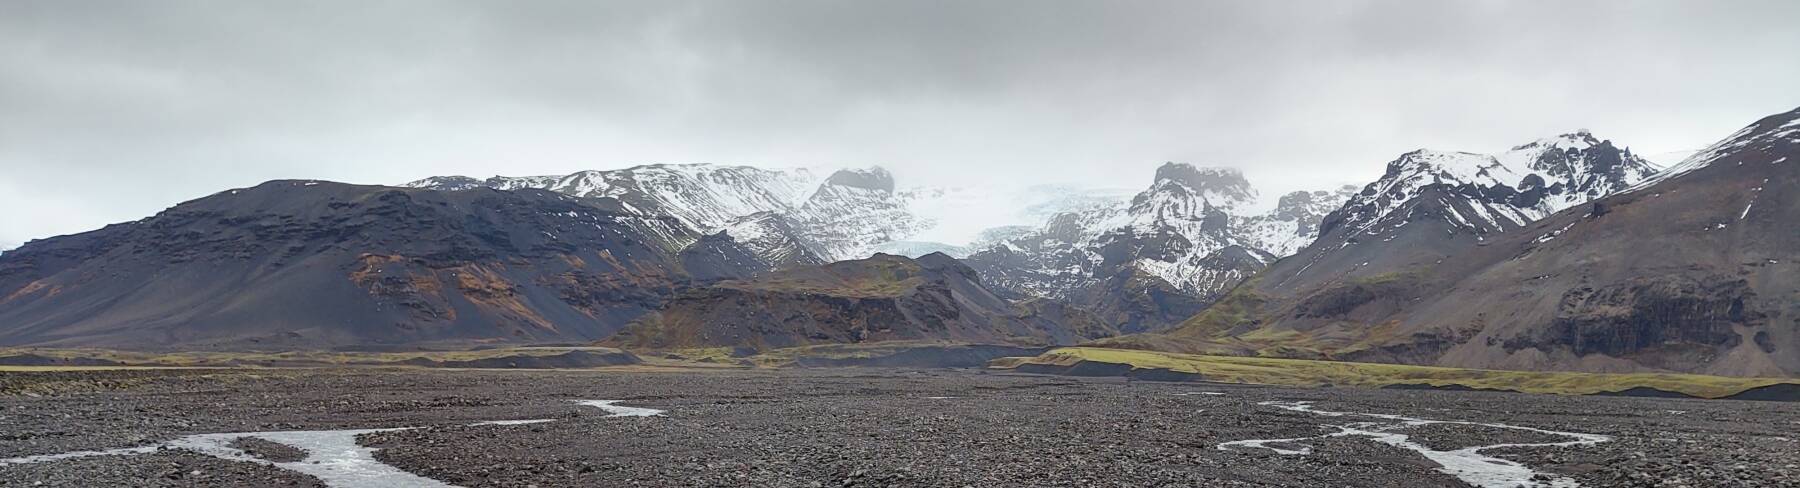 Glacial valleys of Öræfajökull along the Skeiðarársandur glacial outflow on the Ring Road in Iceland.